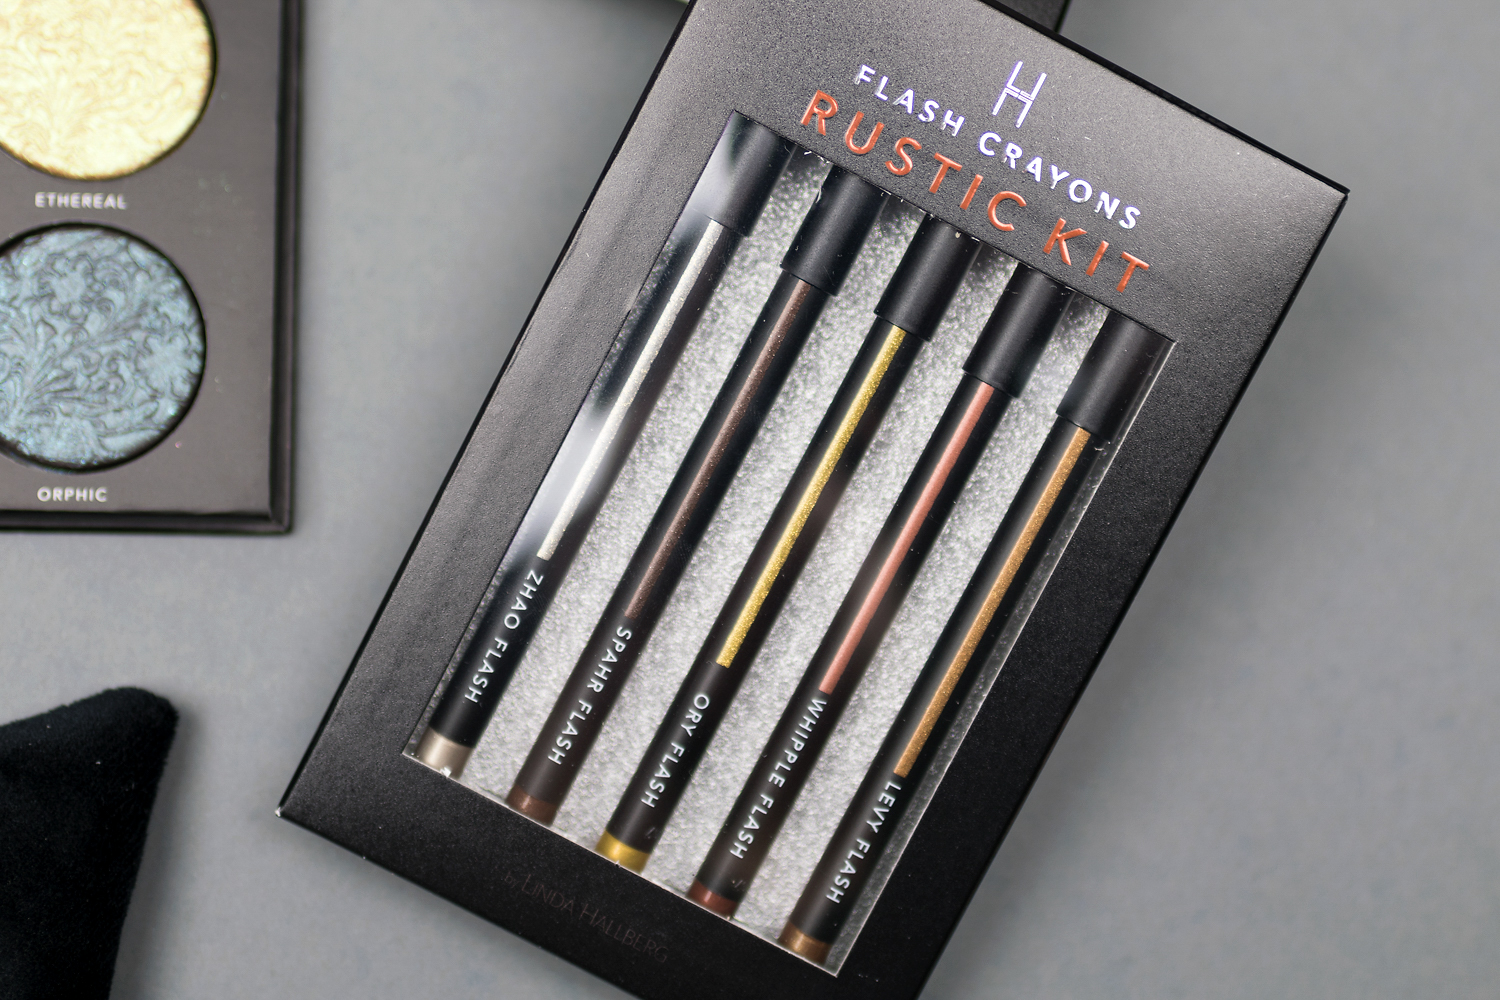 linda hallberg cosmetics flash crayons